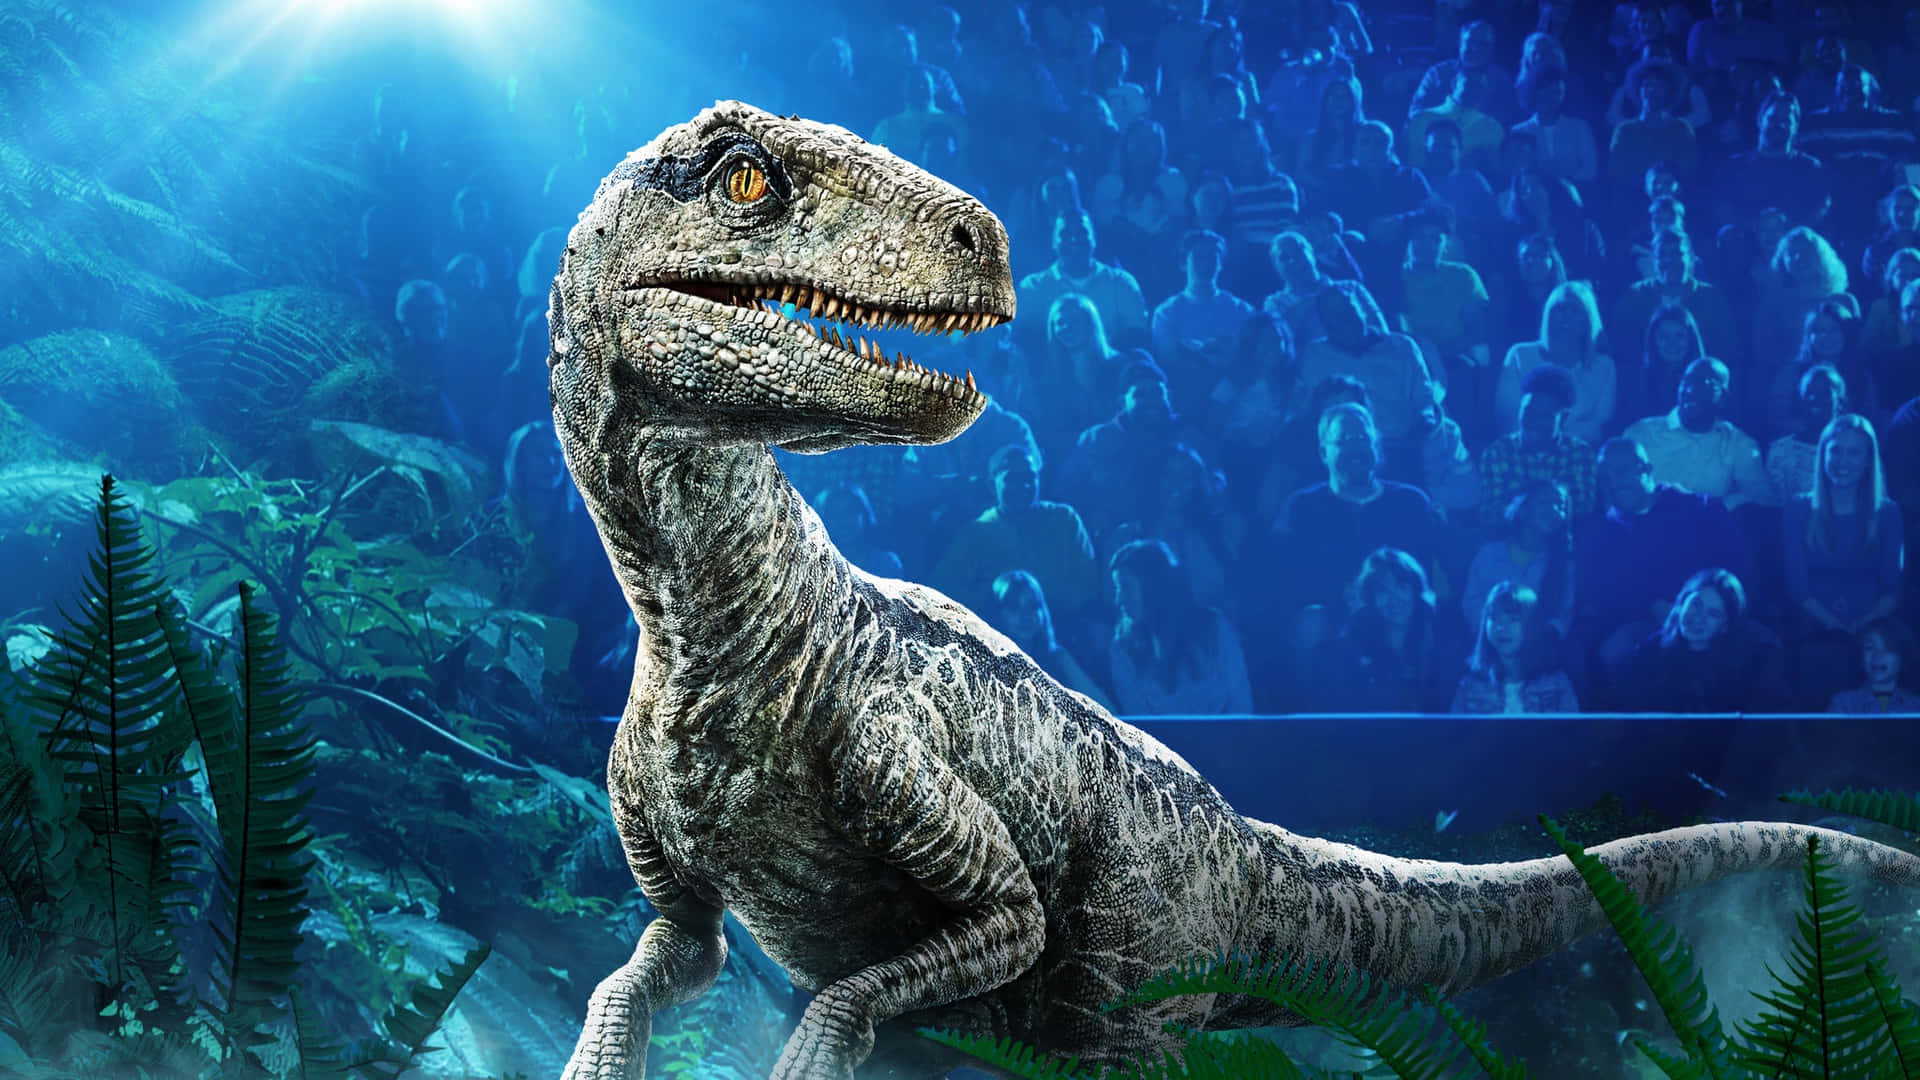 Explore the breathtaking wonders of Jurassic World